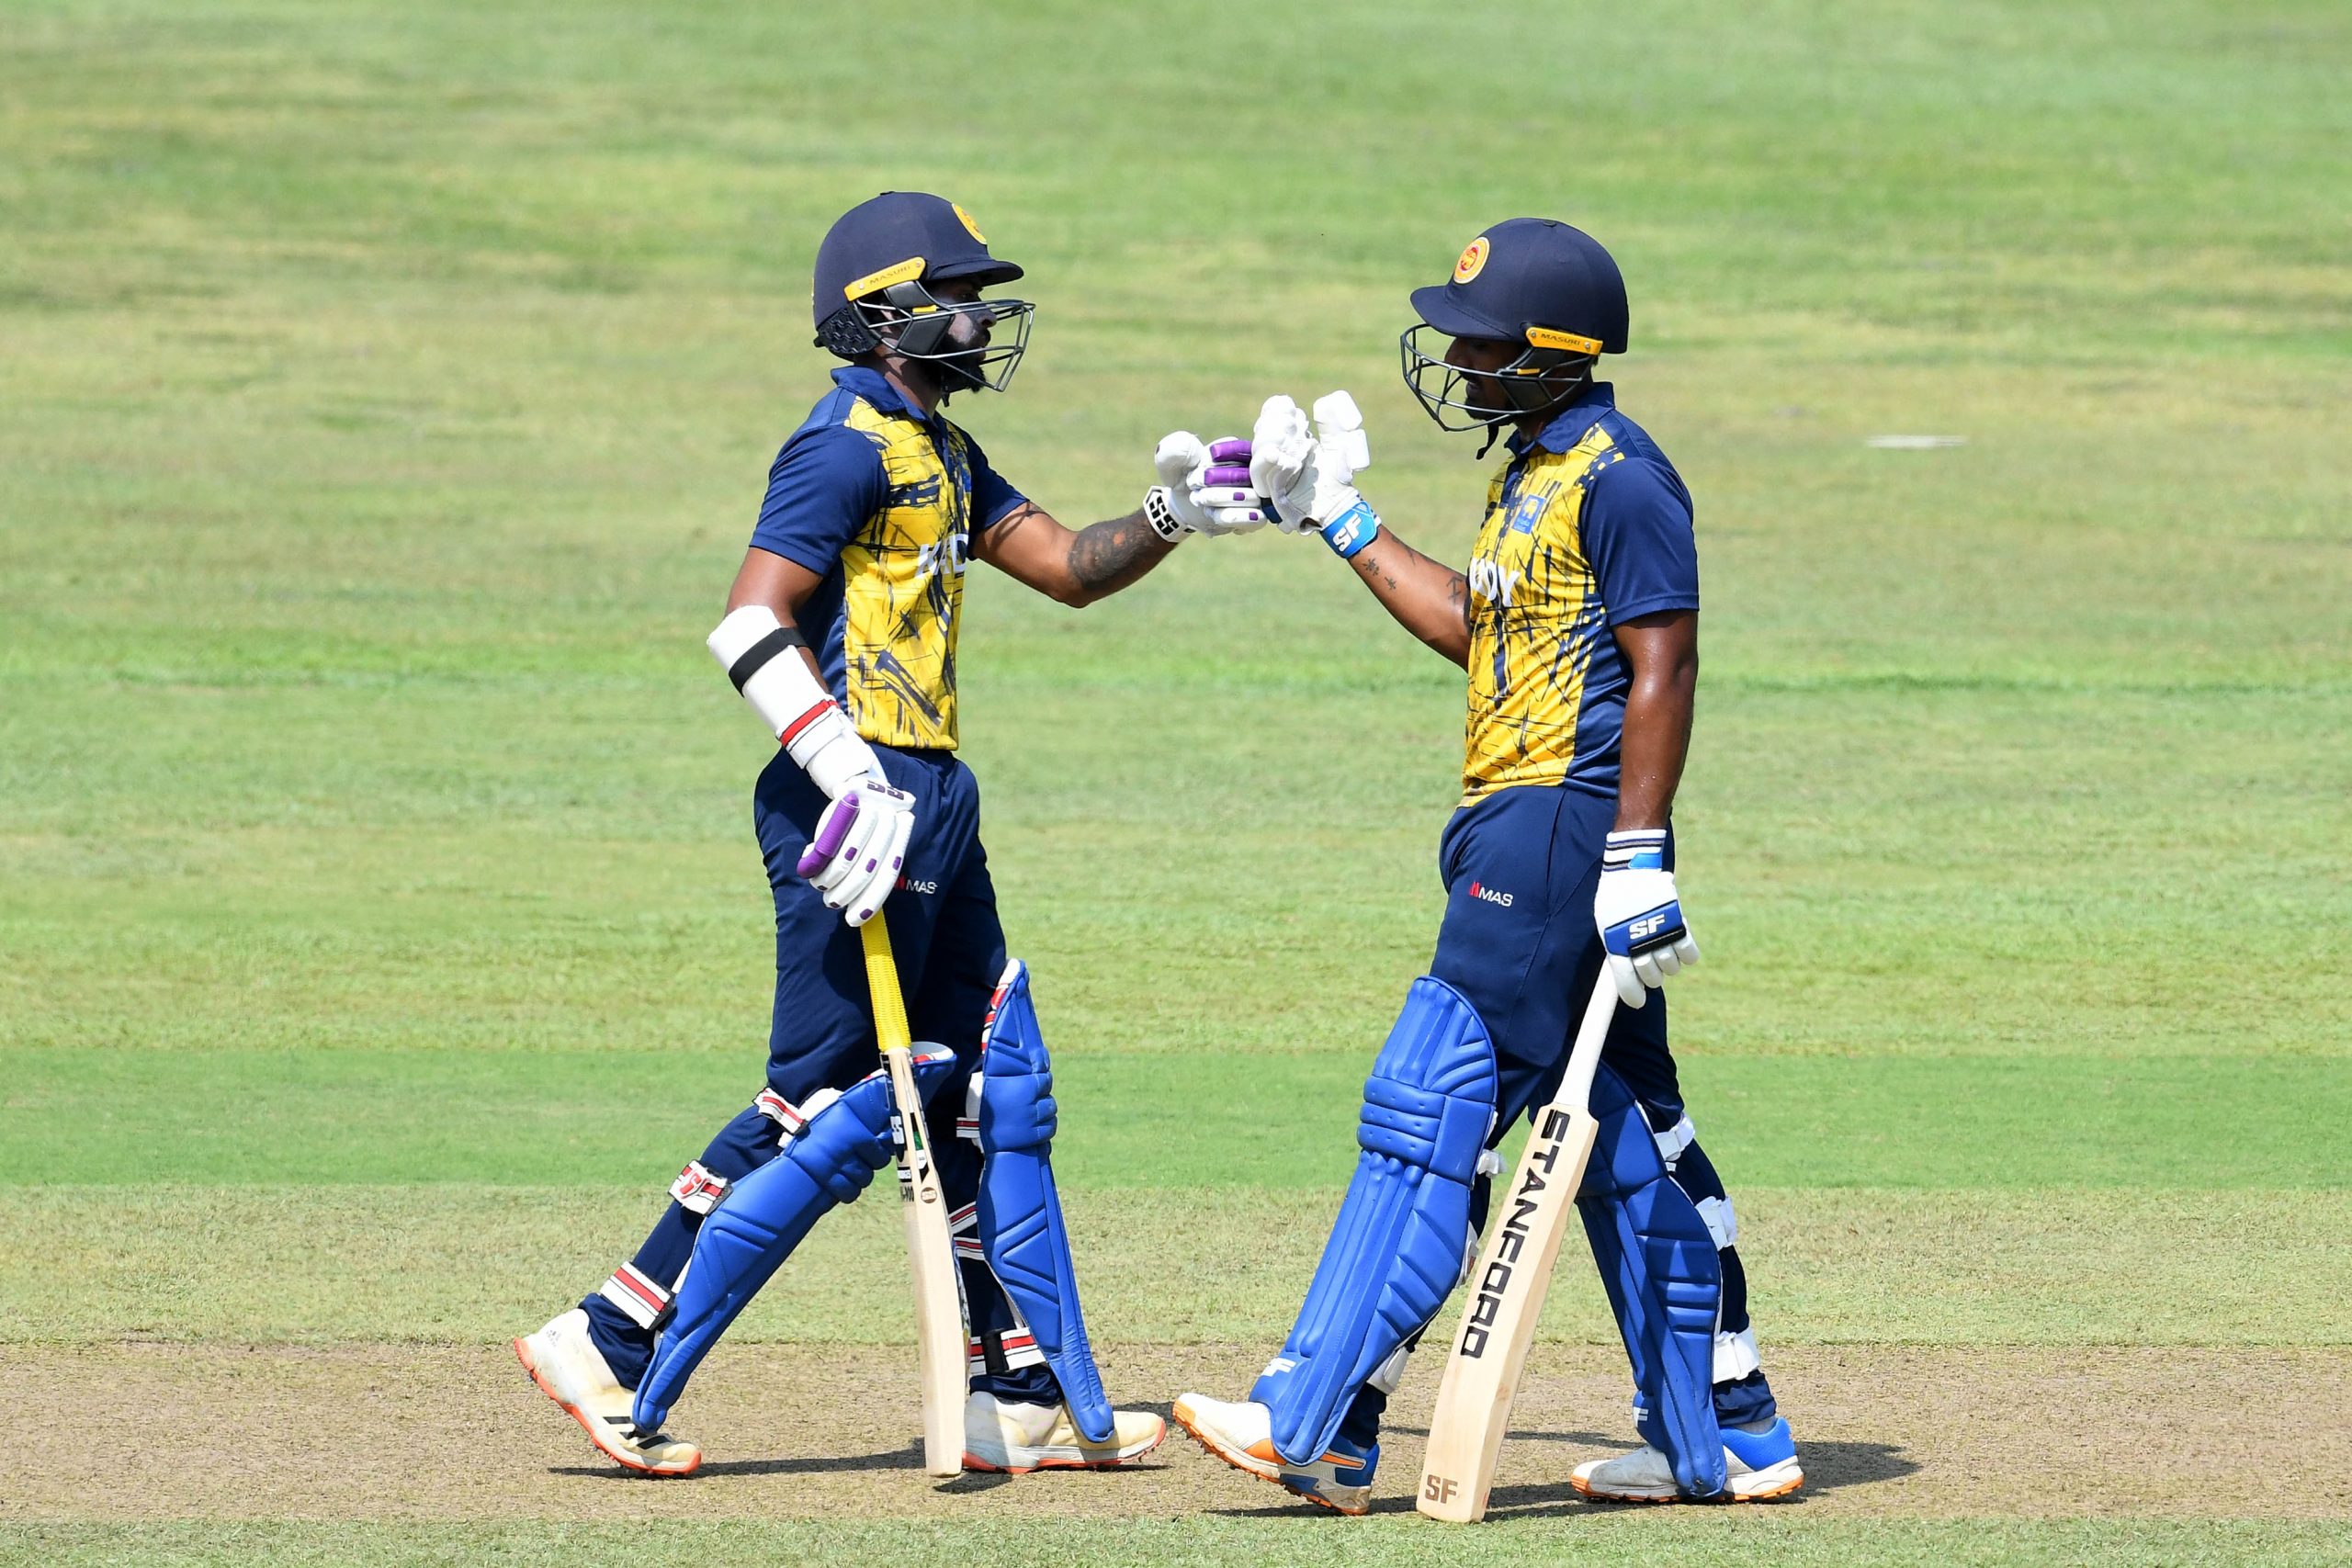 Niroshan Dickwella 135, Lahiru Udara 106, Ashian Daniel 4/46 in Kandy’s routing of Galle; Dhananjaya de Silva 79 & 2 wkts in Jaffna’s 4-wkt win over Colombo